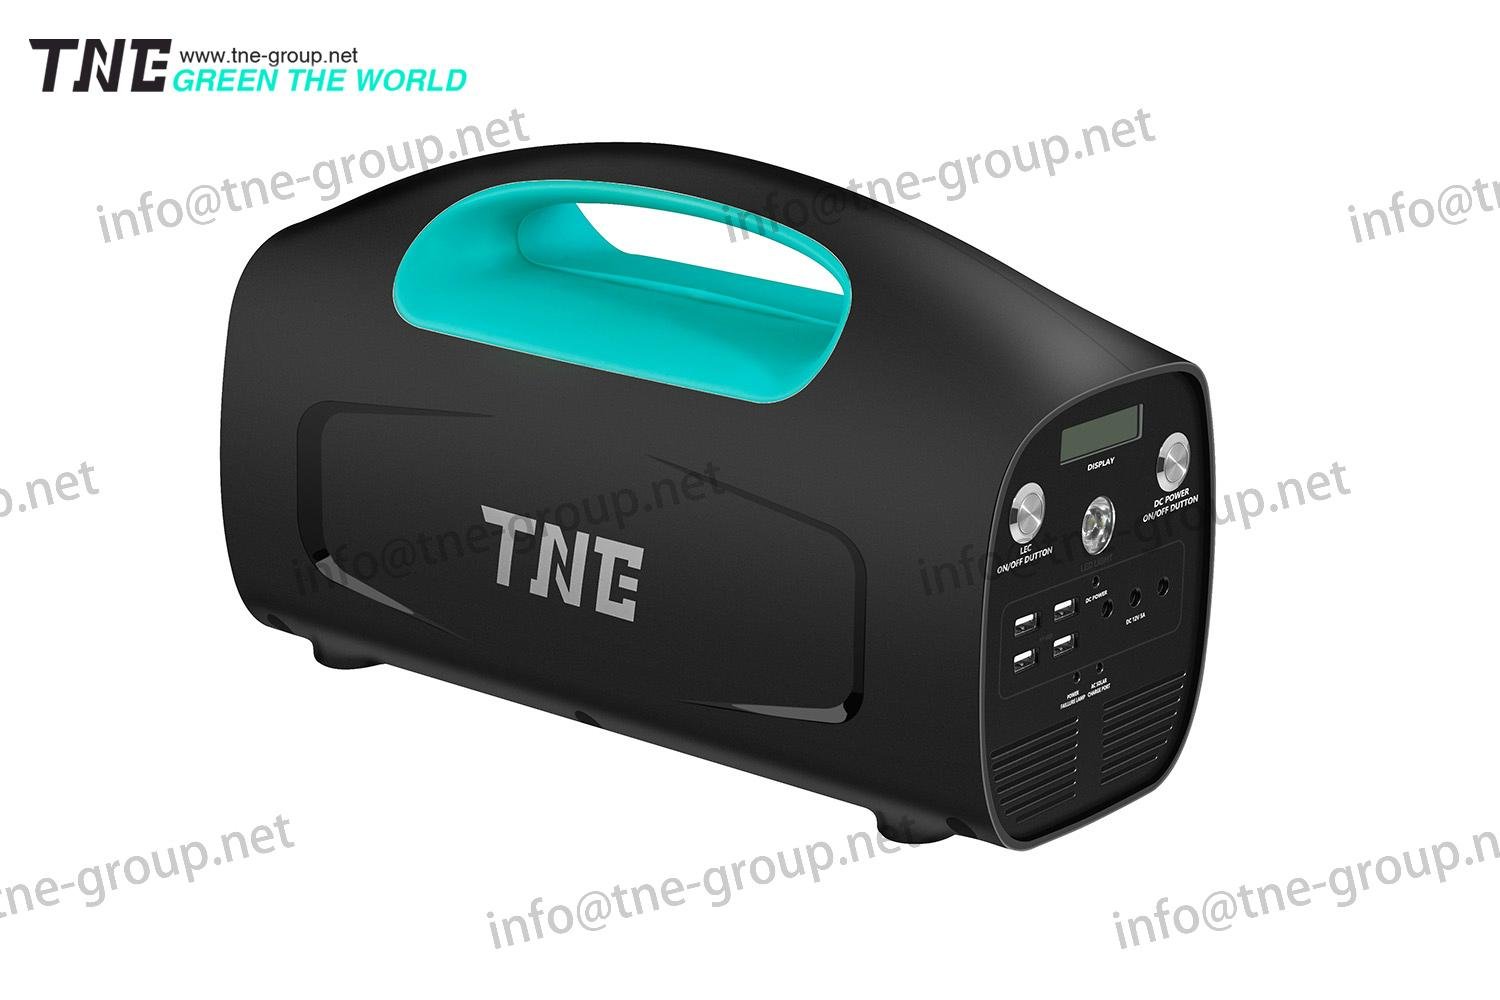 TNE solar online high frequency mini ups tportable generator power bank 3